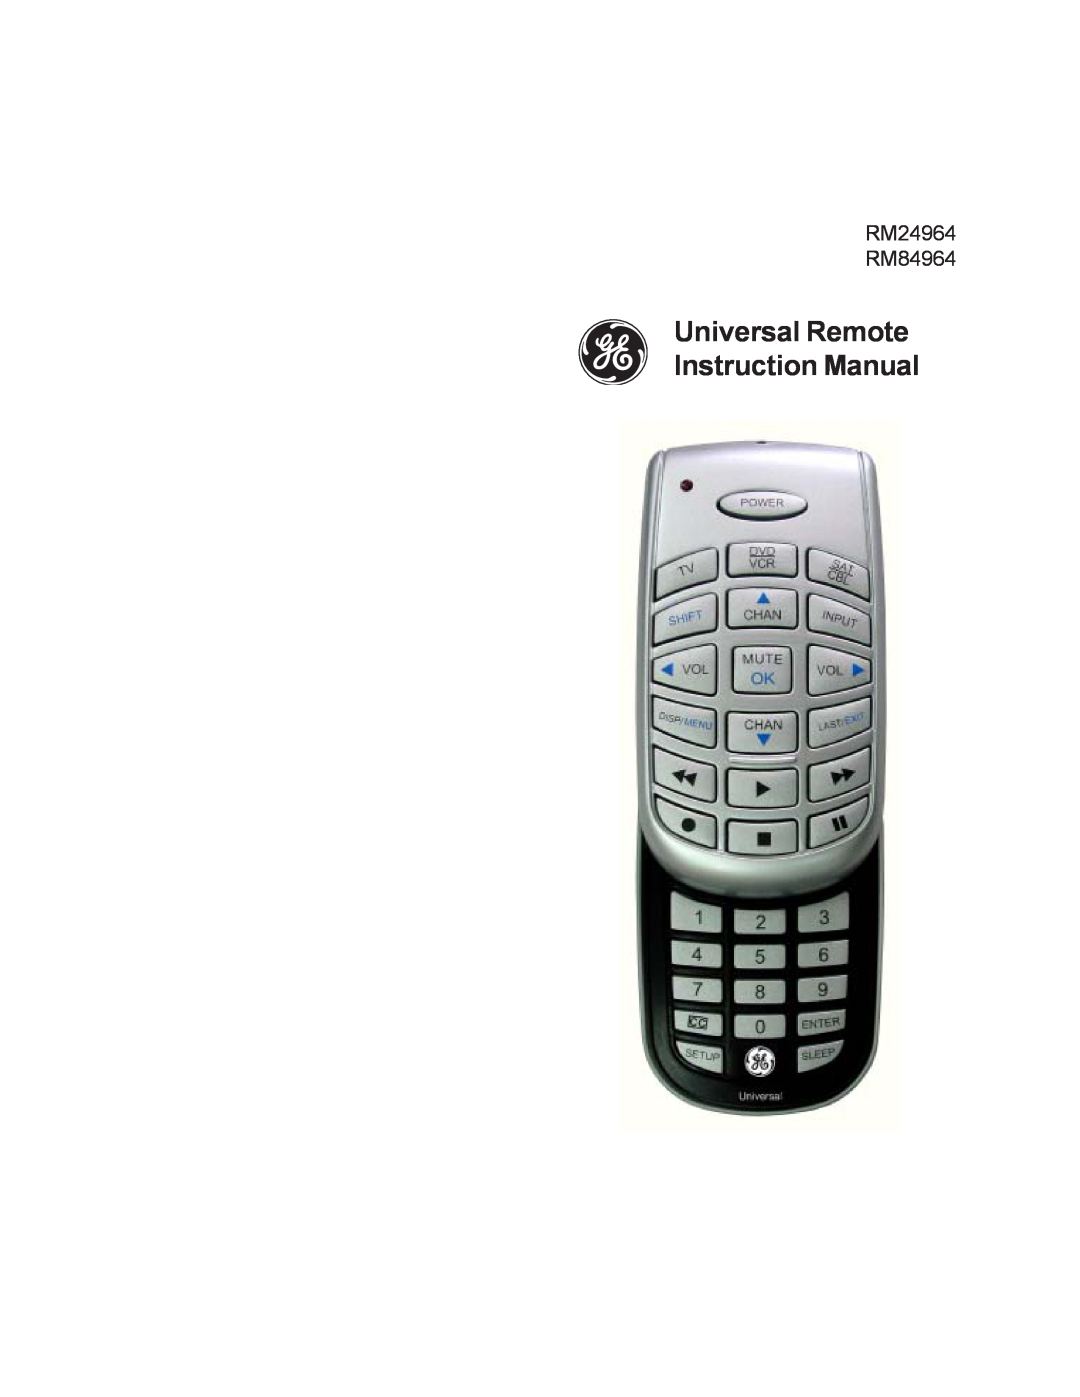 Jasco instruction manual Universal Remote Instruction Manual, RM24964 RM84964 